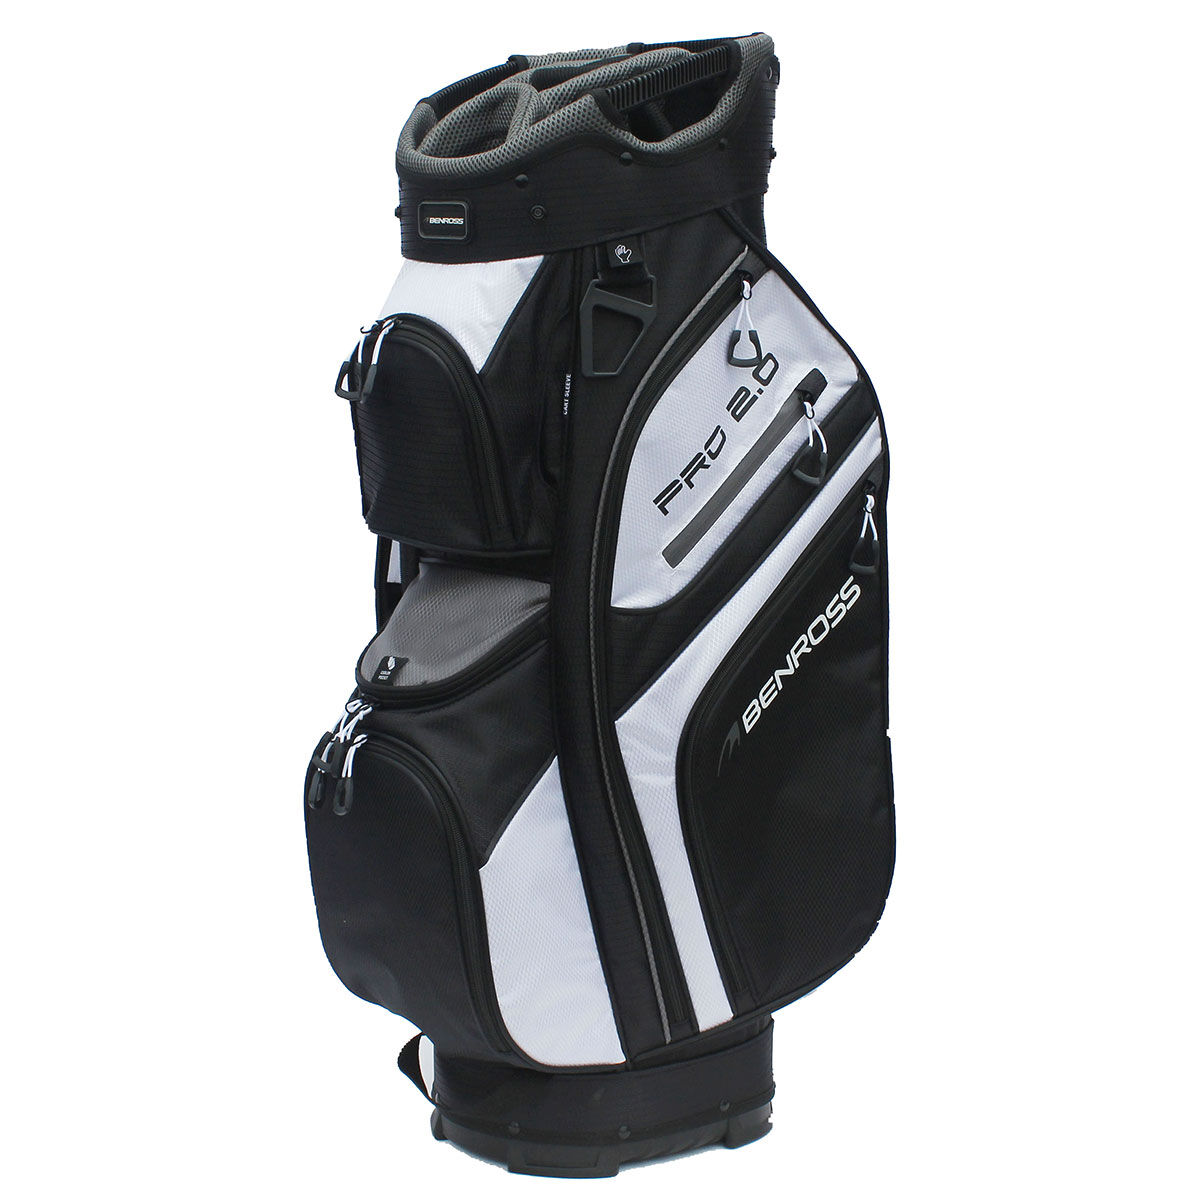 Benross PROTEC 2.0 Deluxe Golf Cart Bag, Black/white/grey, One Size | American Golf von Benross